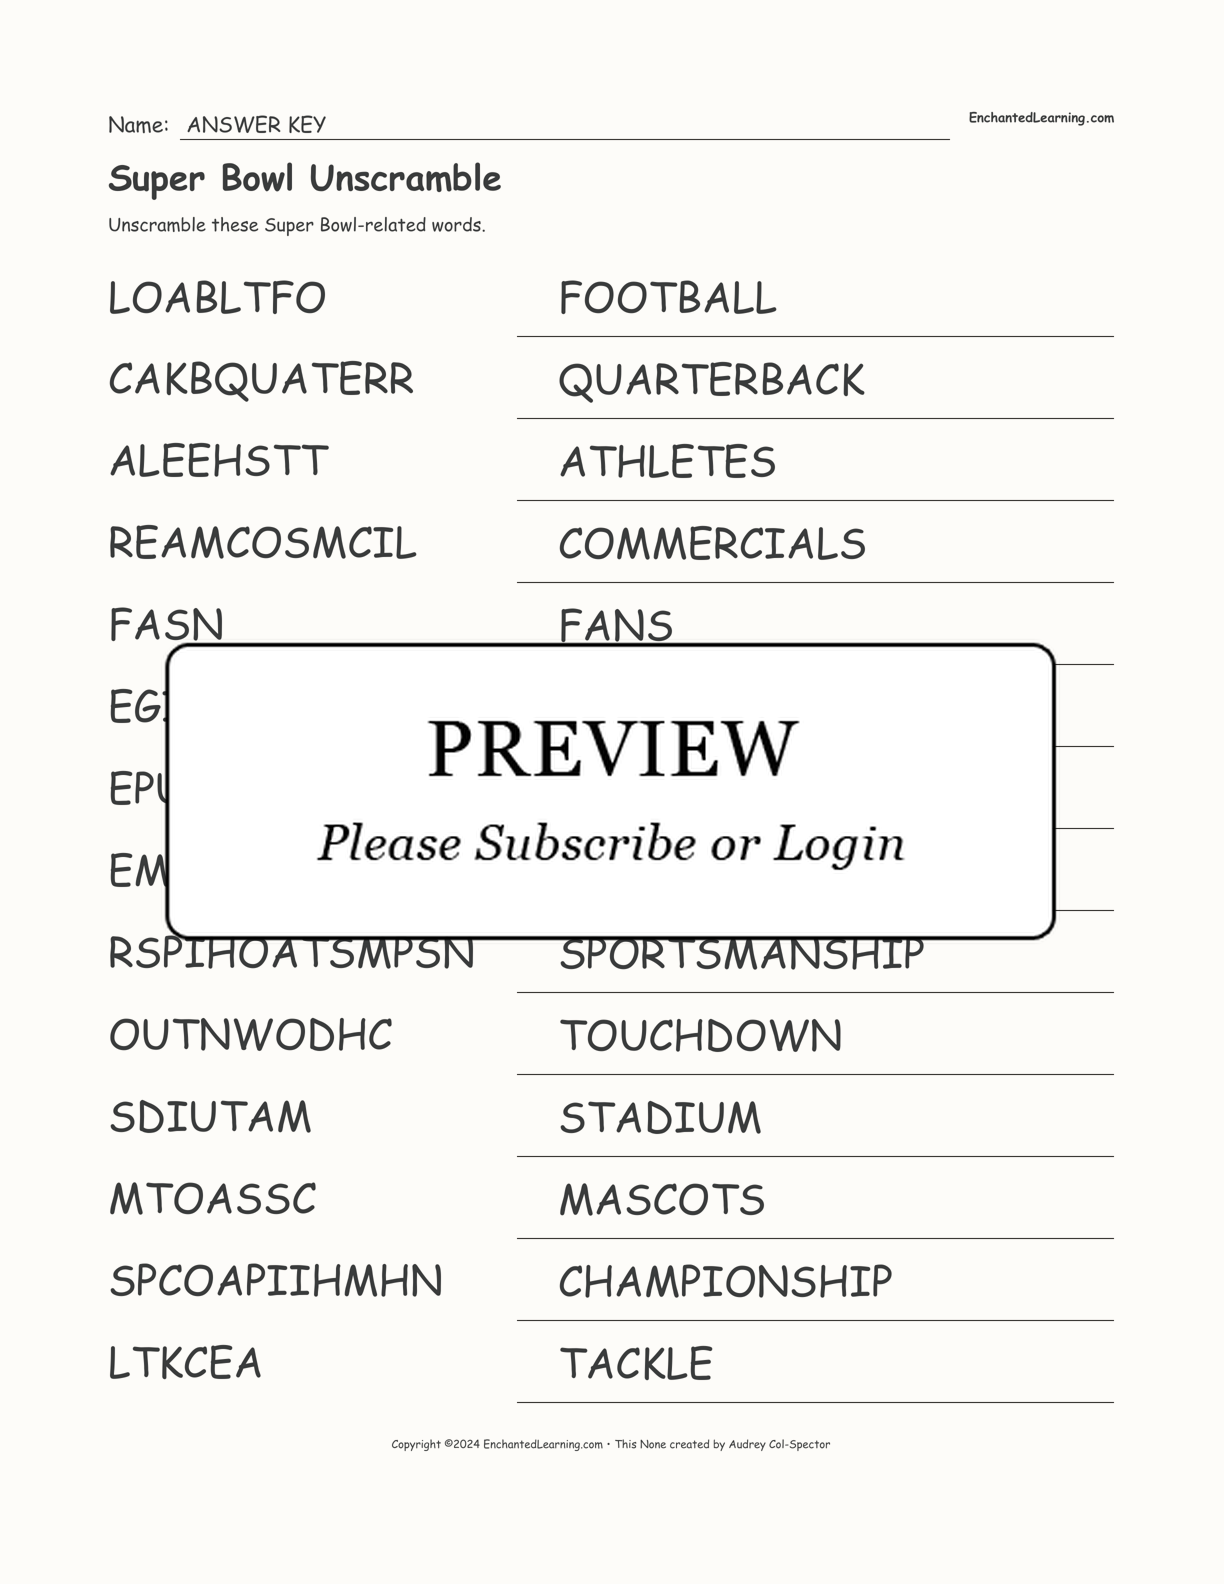 Super Bowl Unscramble interactive worksheet page 2